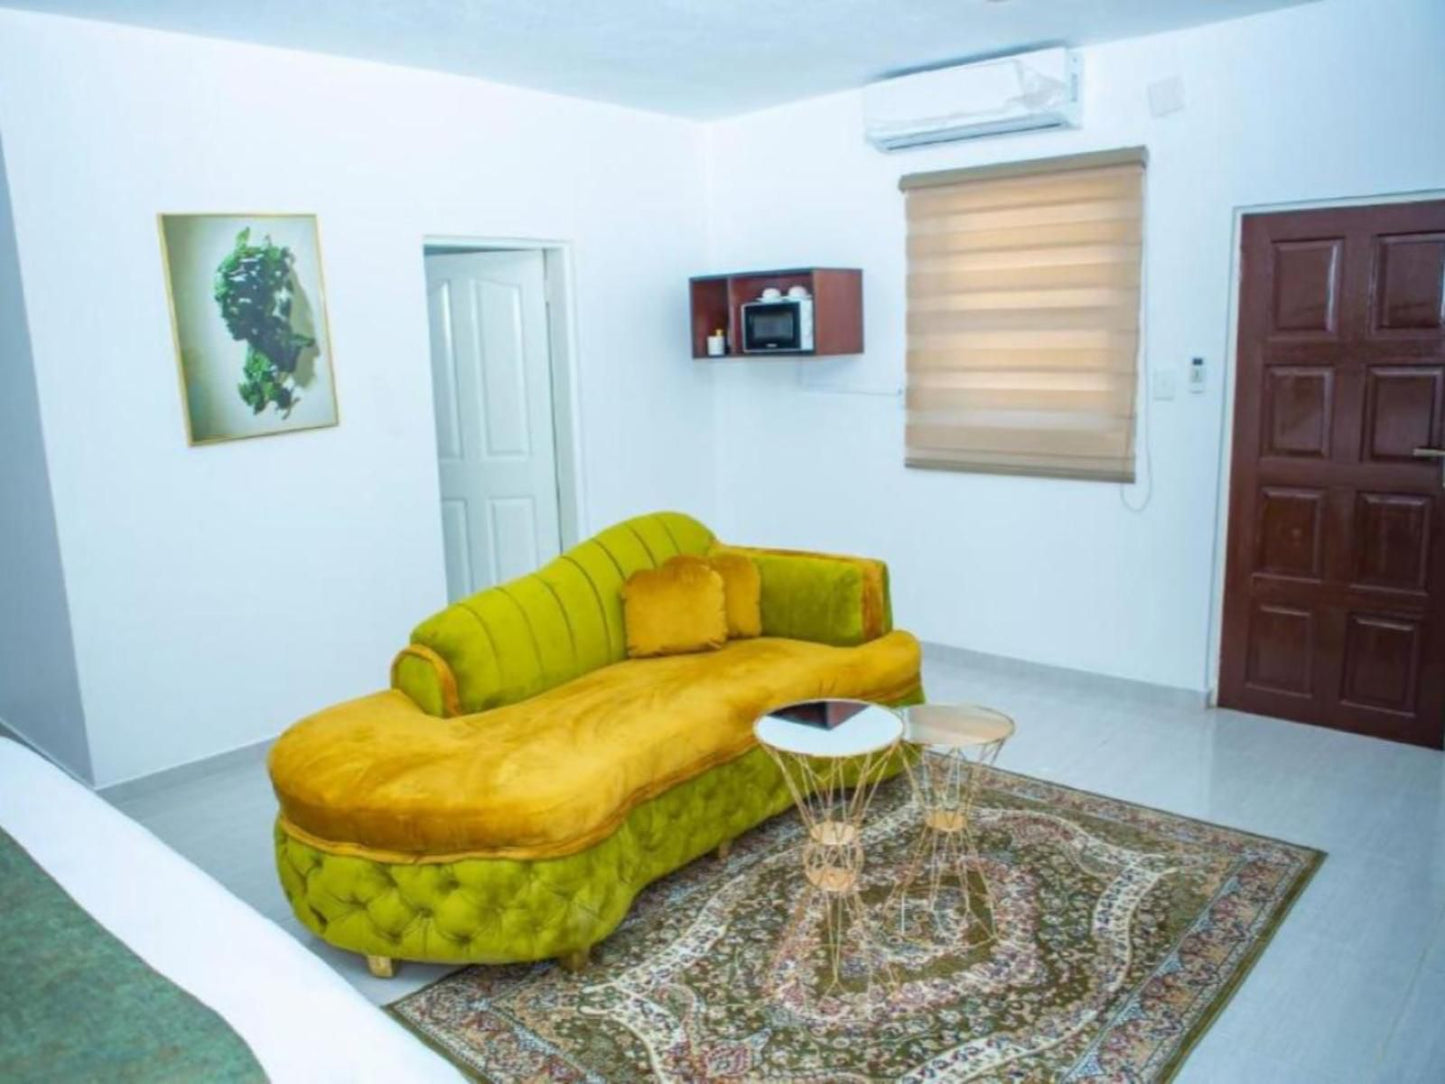 Platinum Eagle Guest House Rosettenville Johannesburg Gauteng South Africa Complementary Colors, Living Room